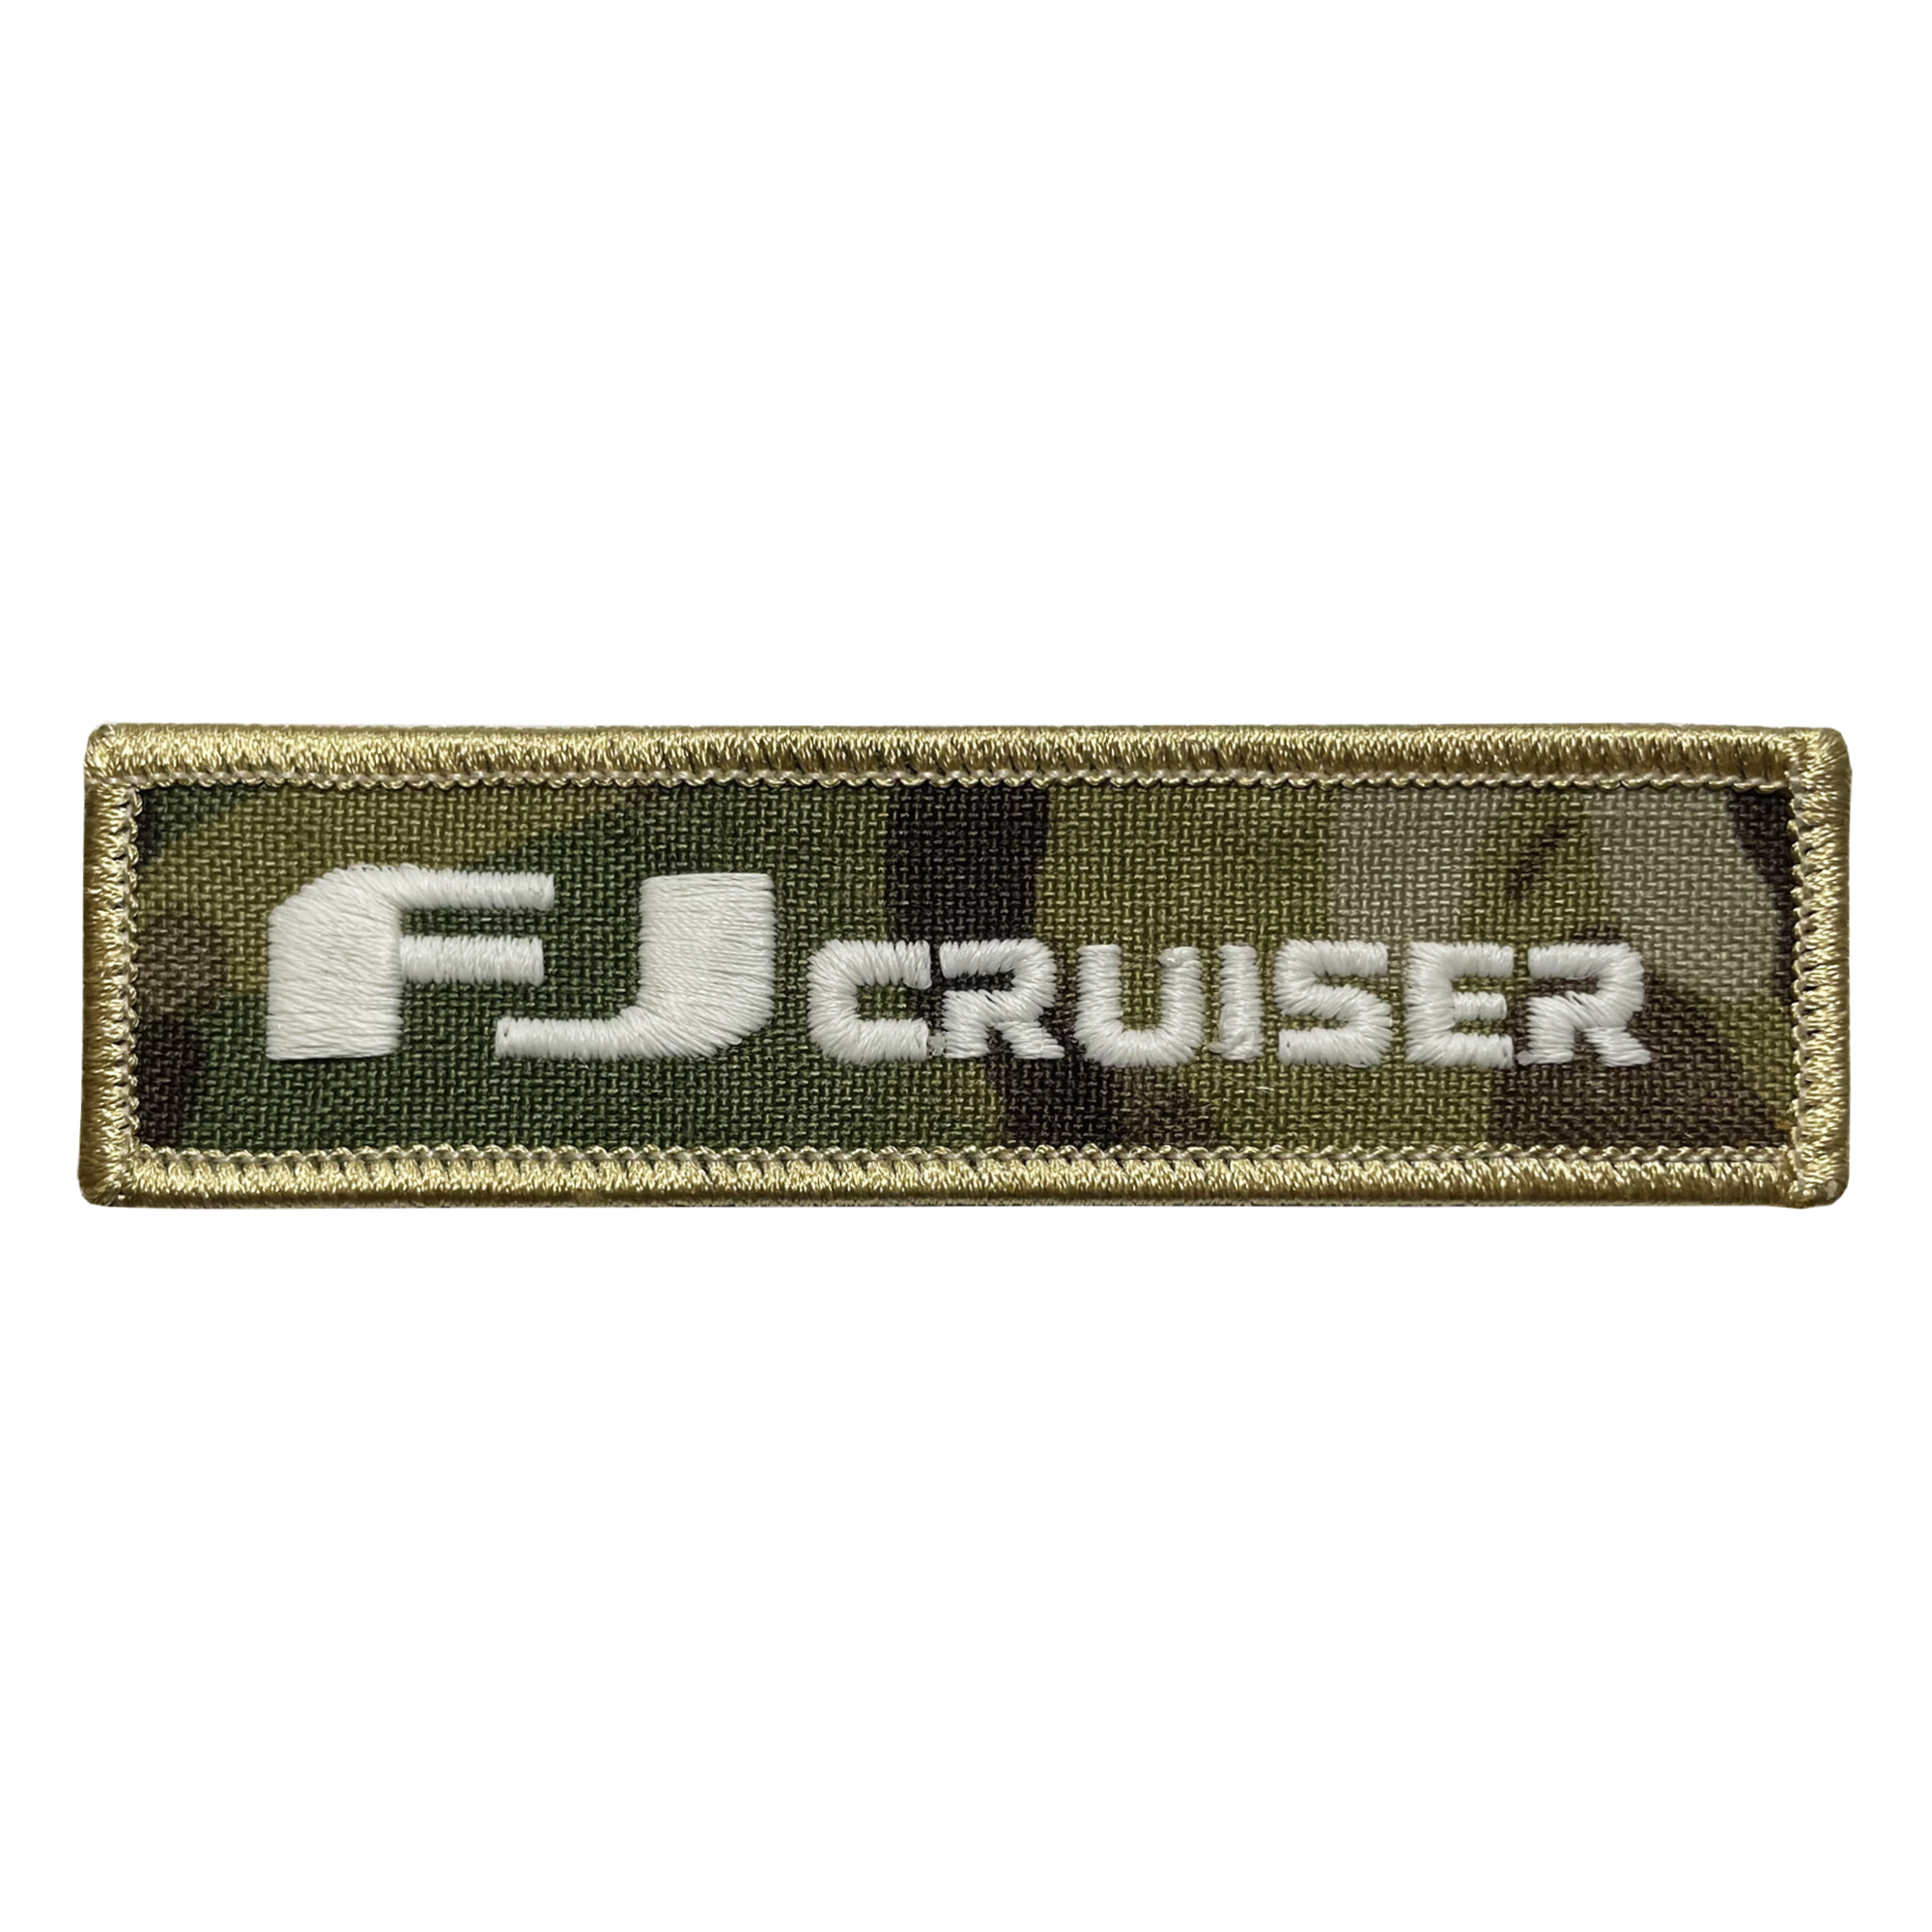 FJ Cruiser Camo Name Tape Patch - GZila Designs